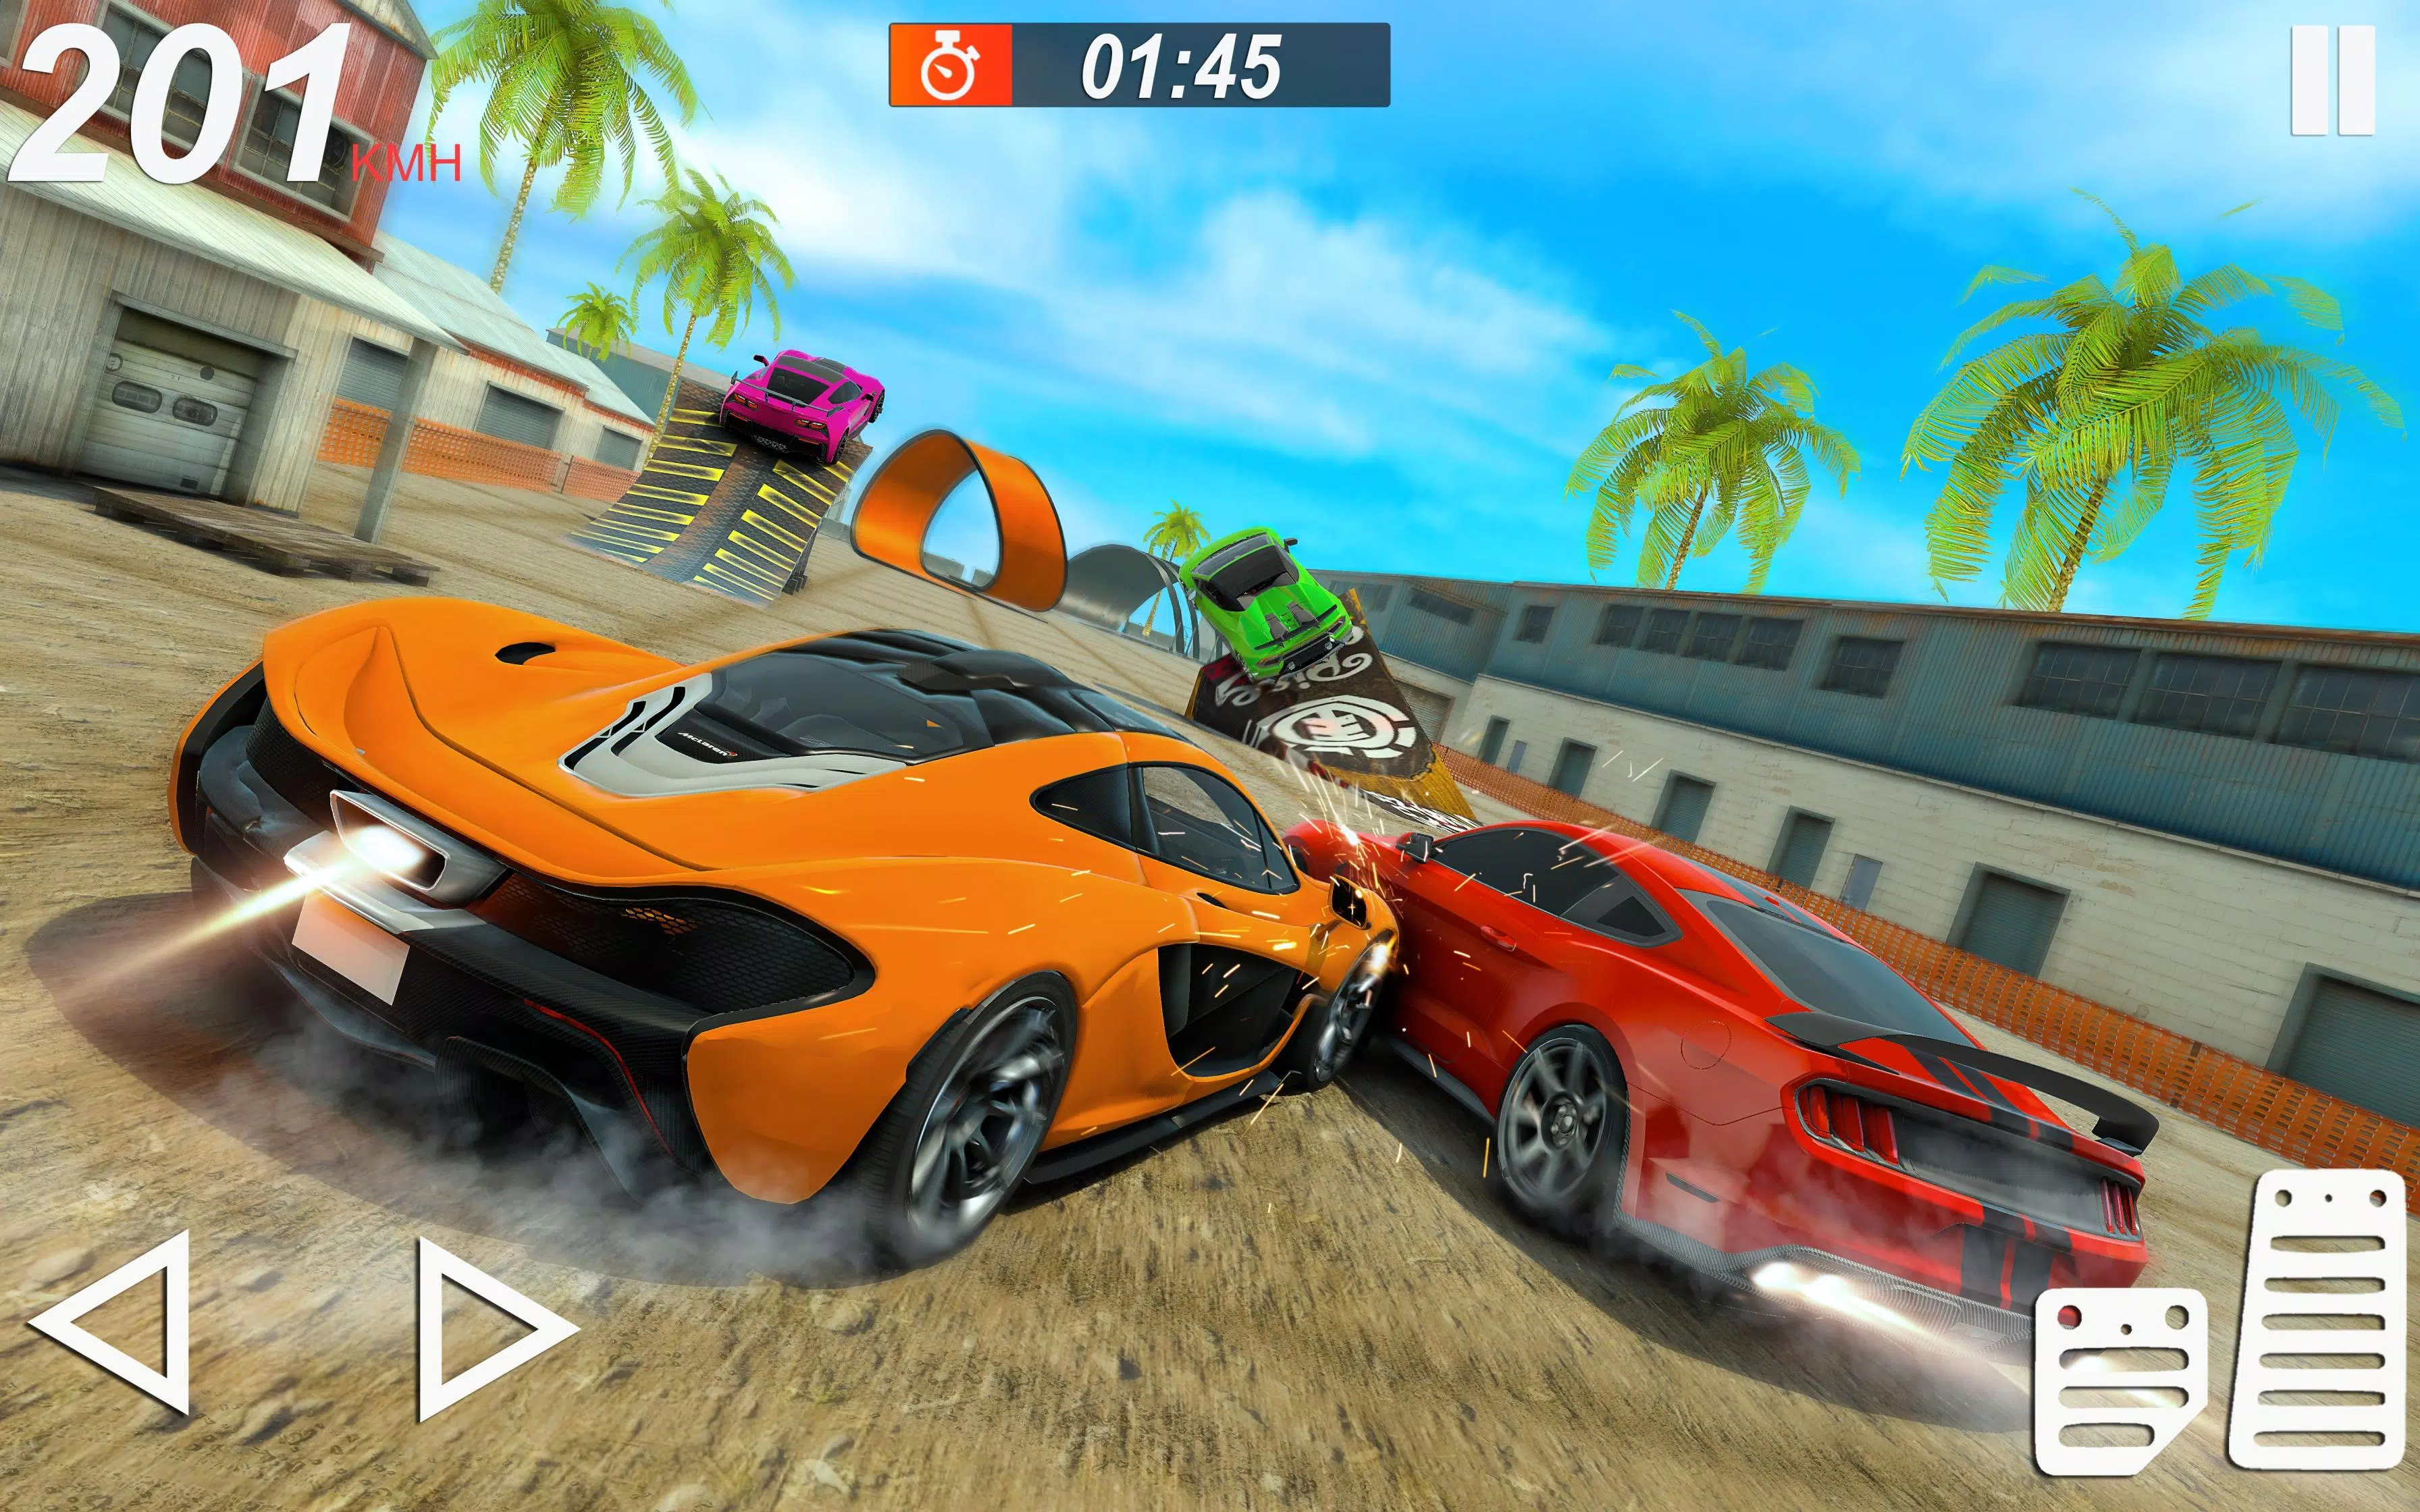 Asphalt 8 - Car Racing Game for Android - Free App Download